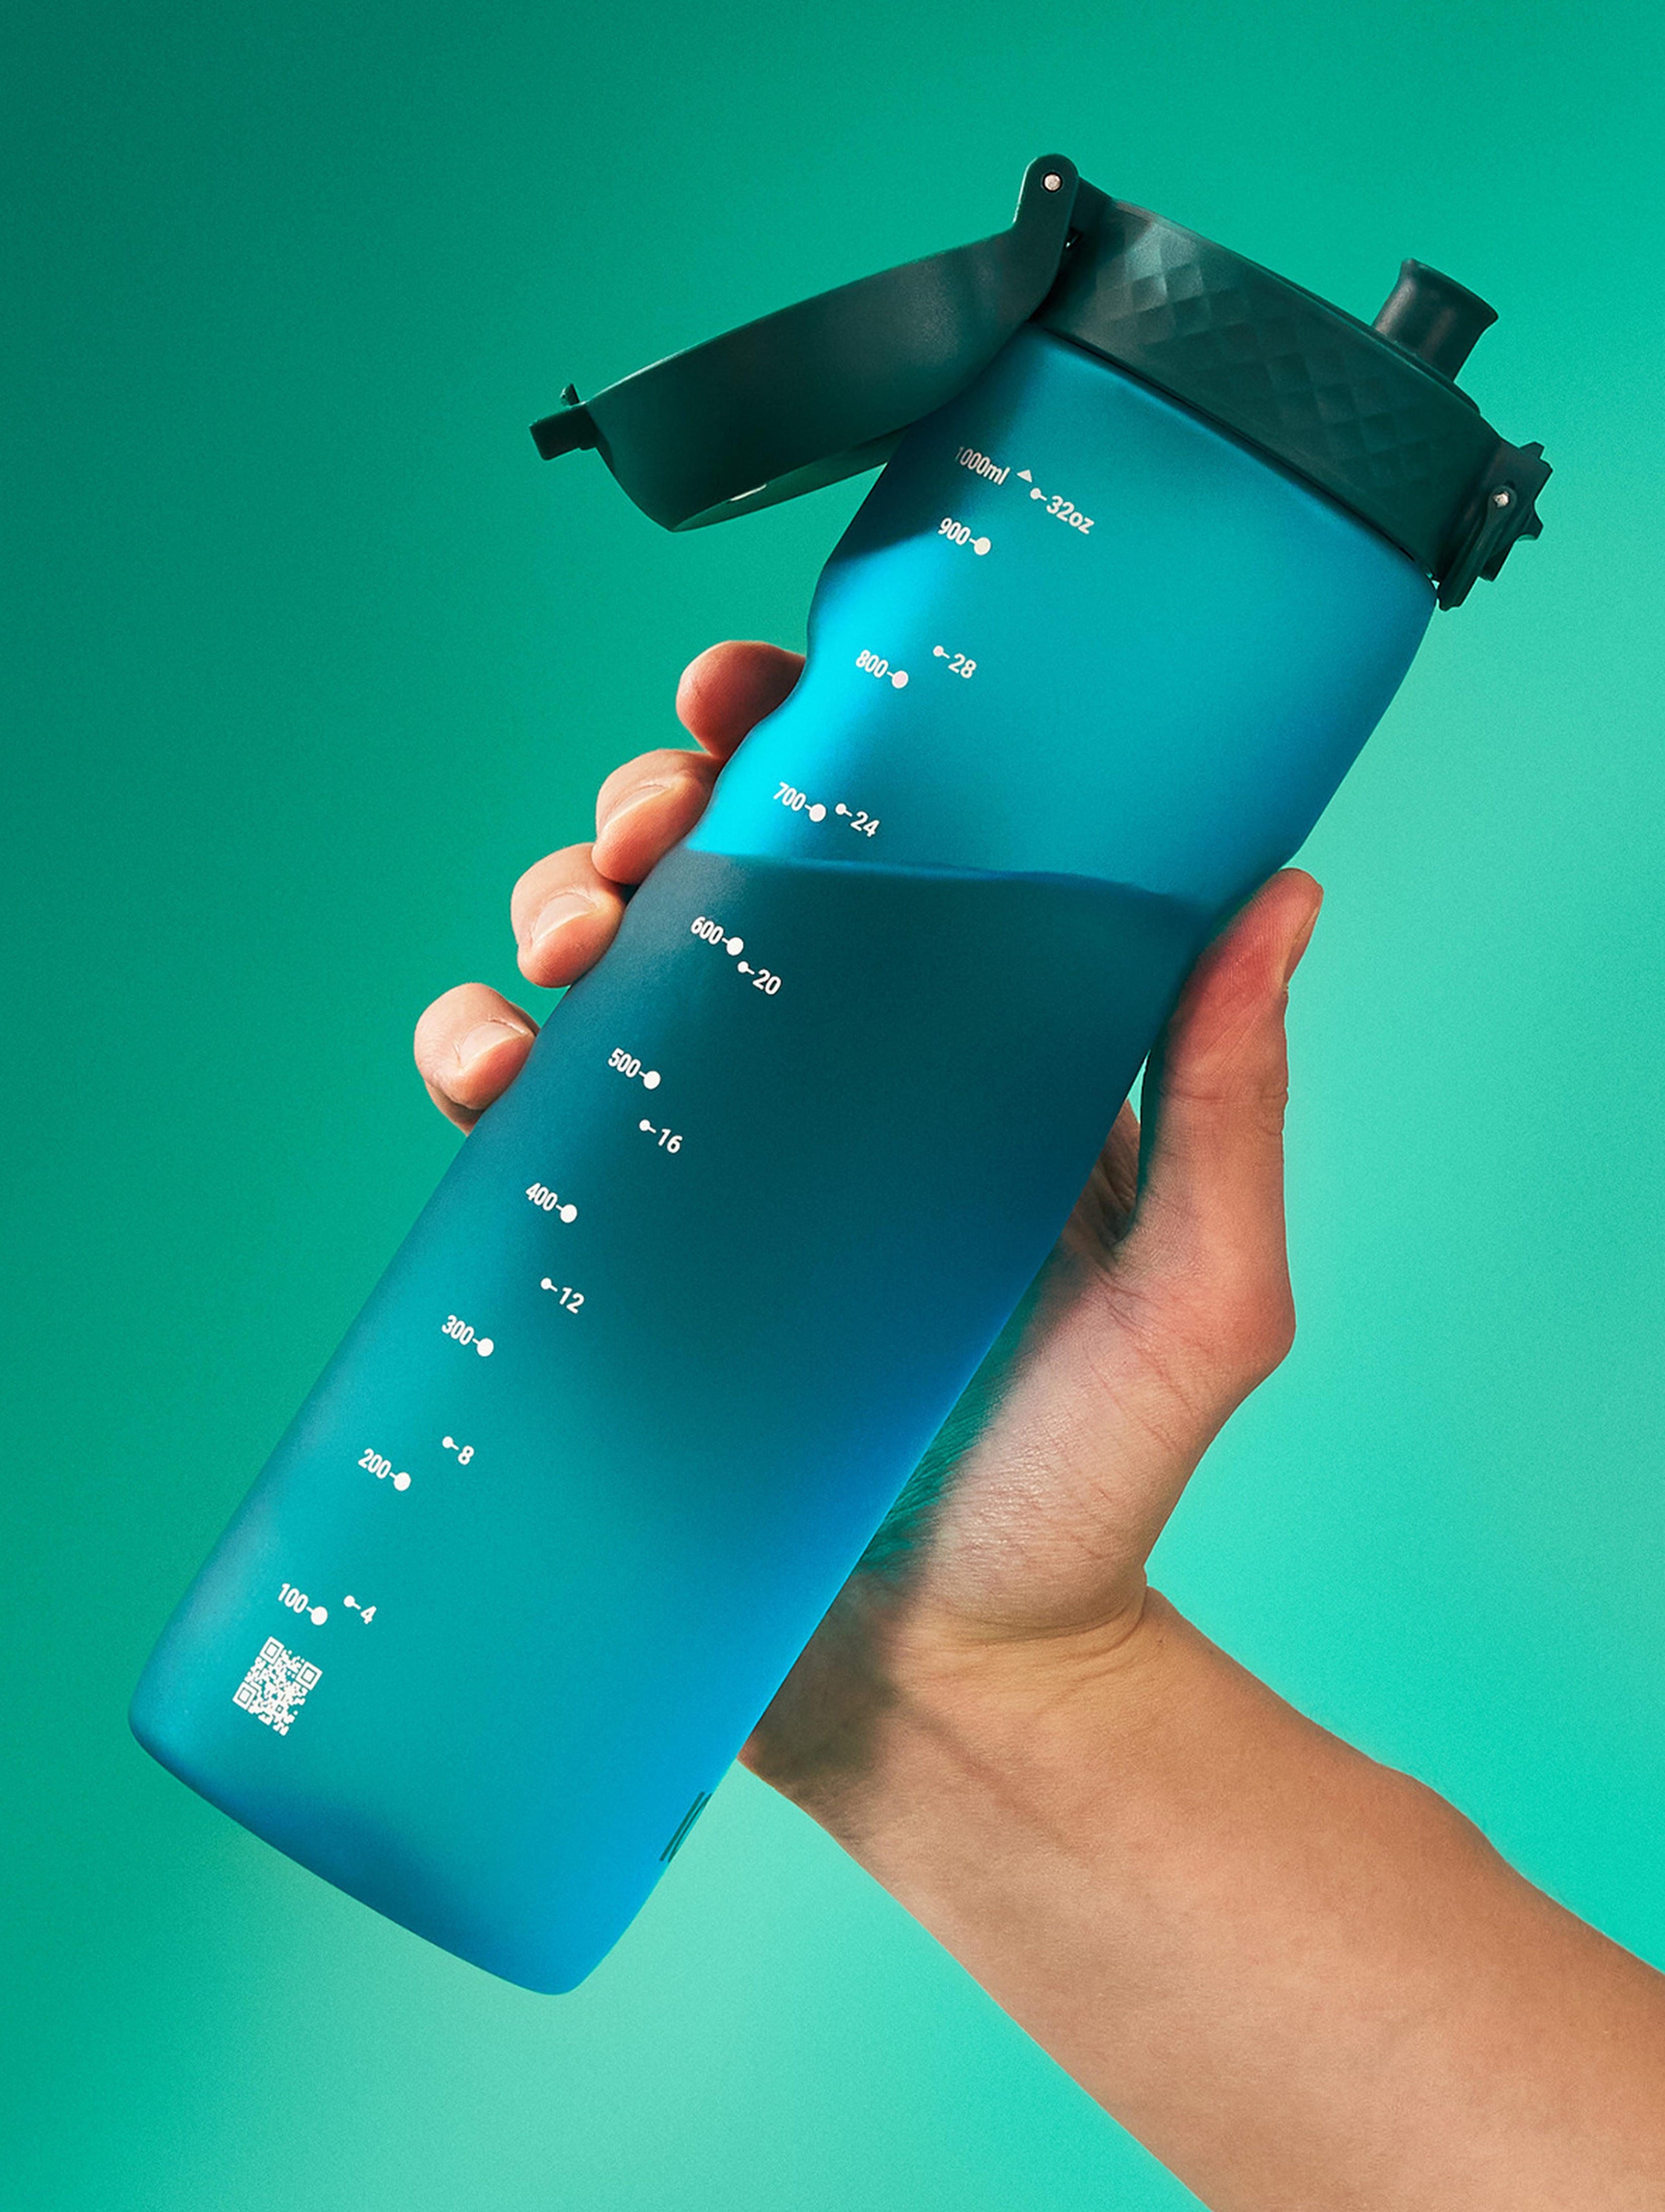 Butelka na wodę ION8 BPA Free Aqua 1200ml - zielona